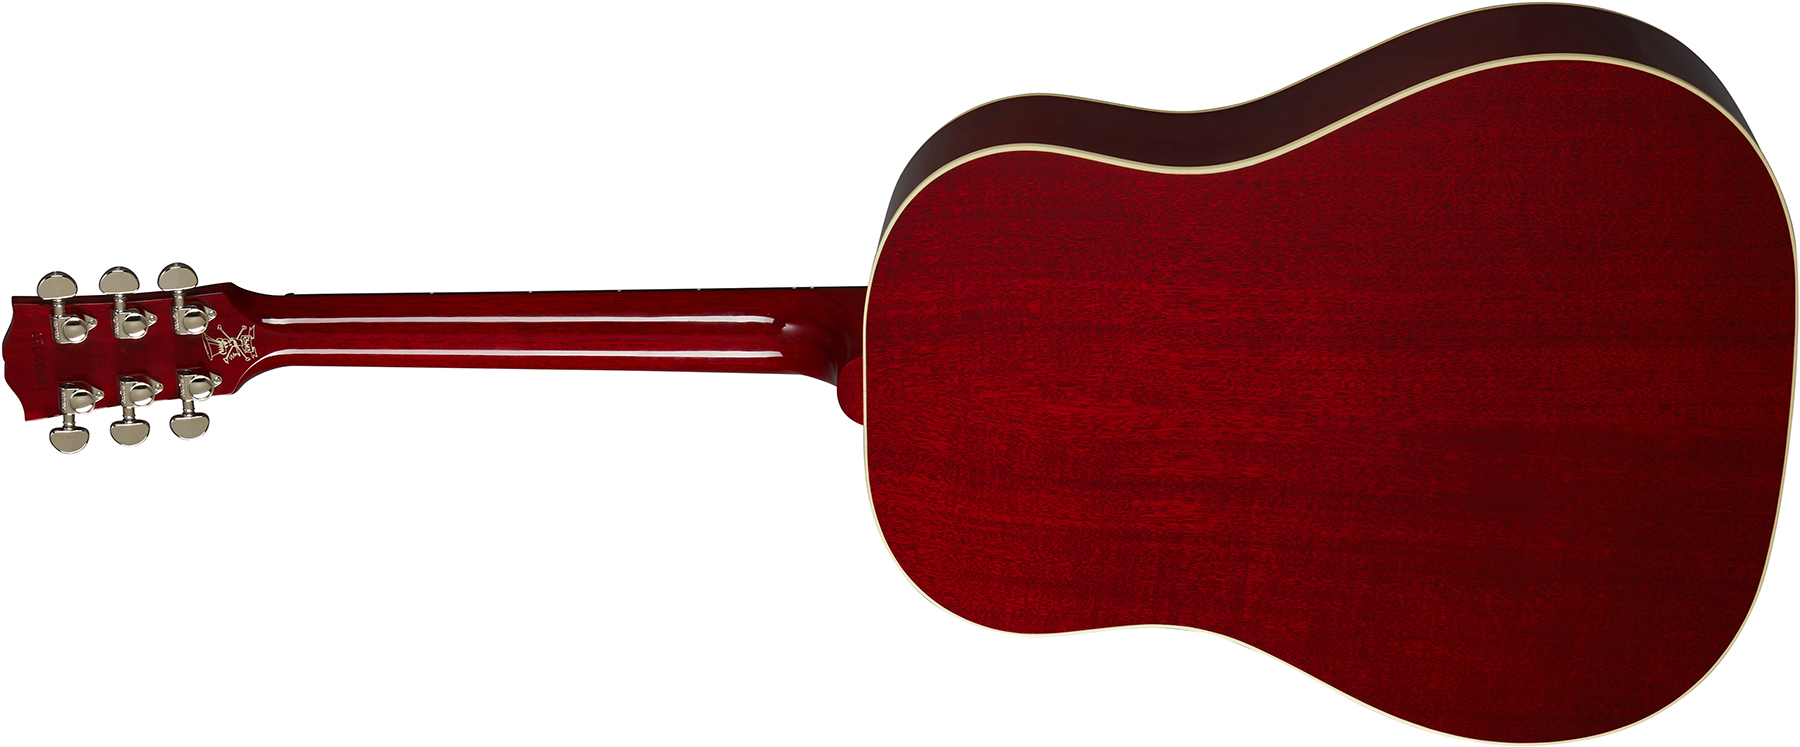 Gibson Slash J-45 2020 Signature Epicea Acajou Rw - Vermillion Burst - Elektroakustische Gitarre - Variation 1